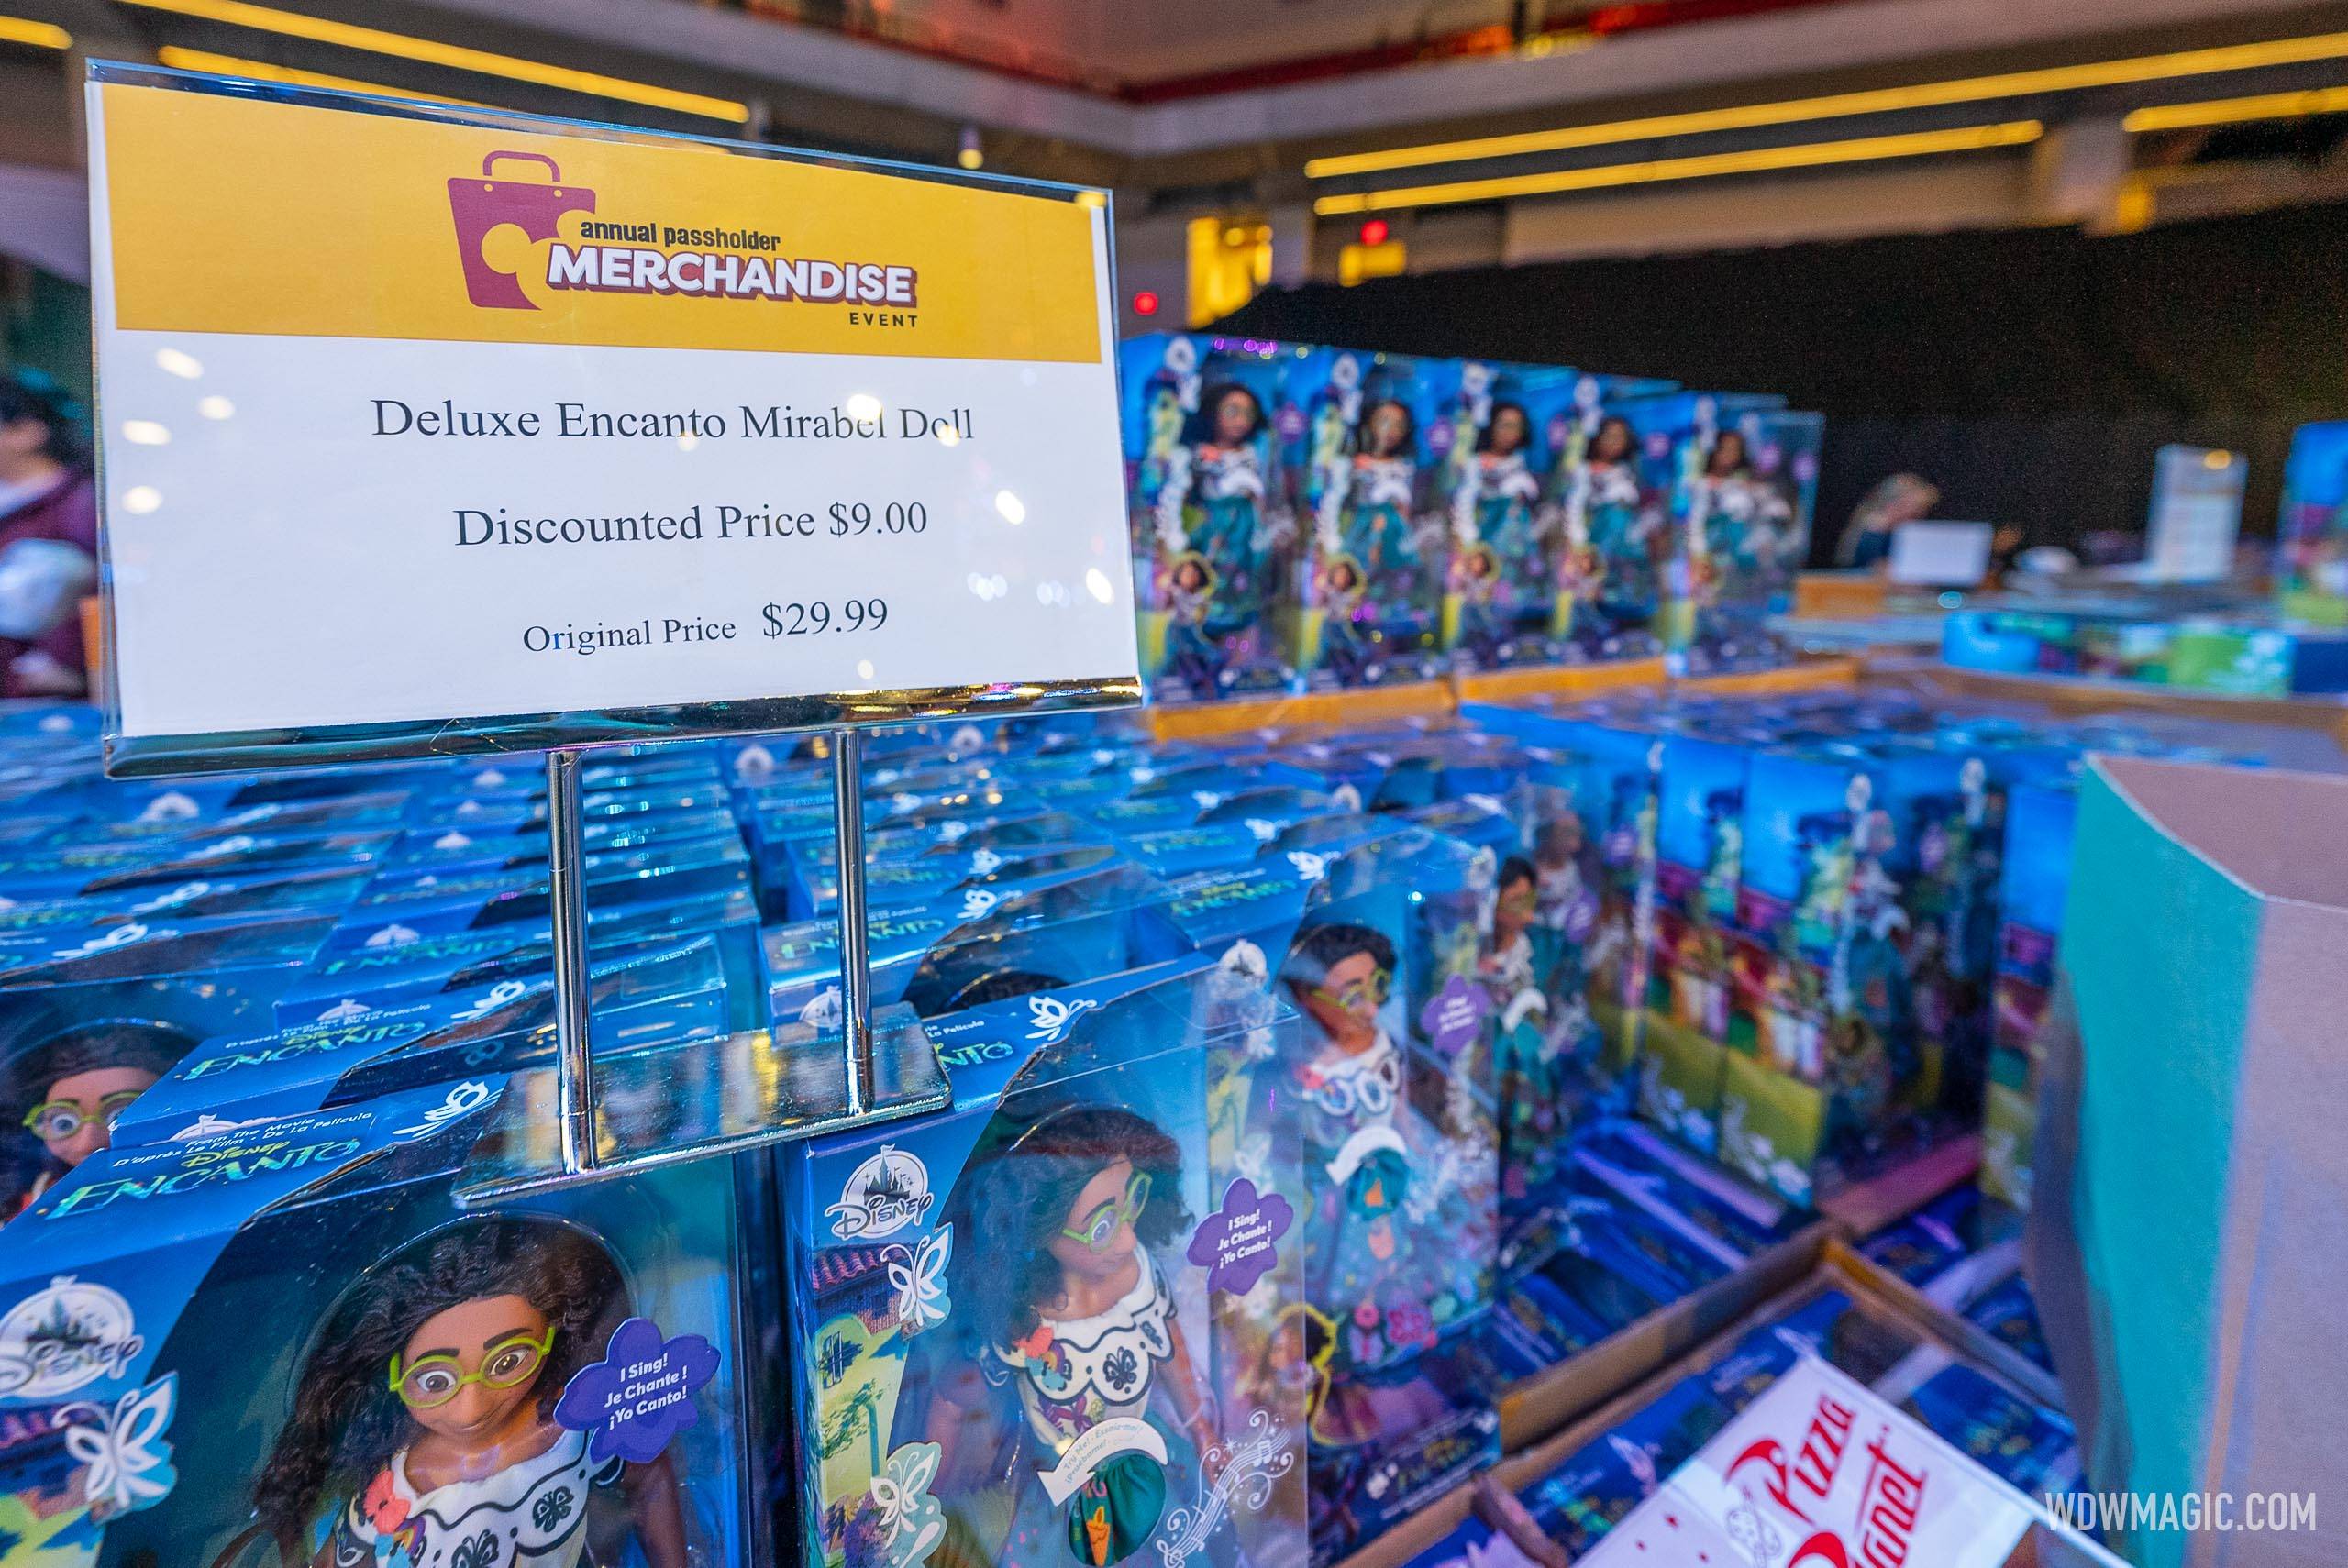 A look inside Walt Disney World's special merchandise event